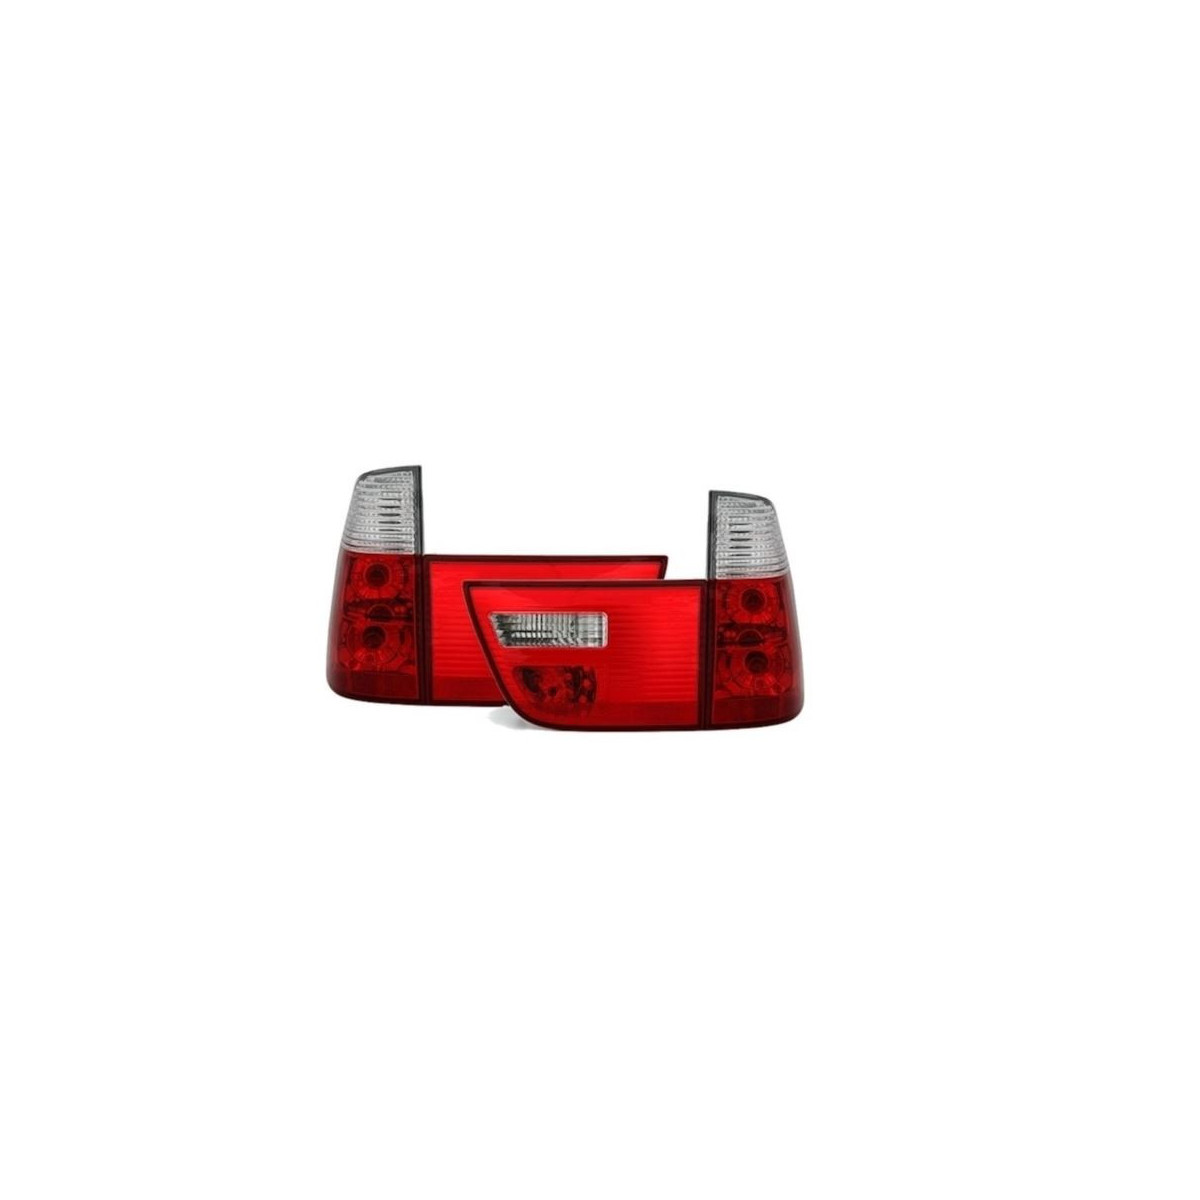 LAMPY TYLNE BMW E53 X5 09/99-10/03 RED WHITE